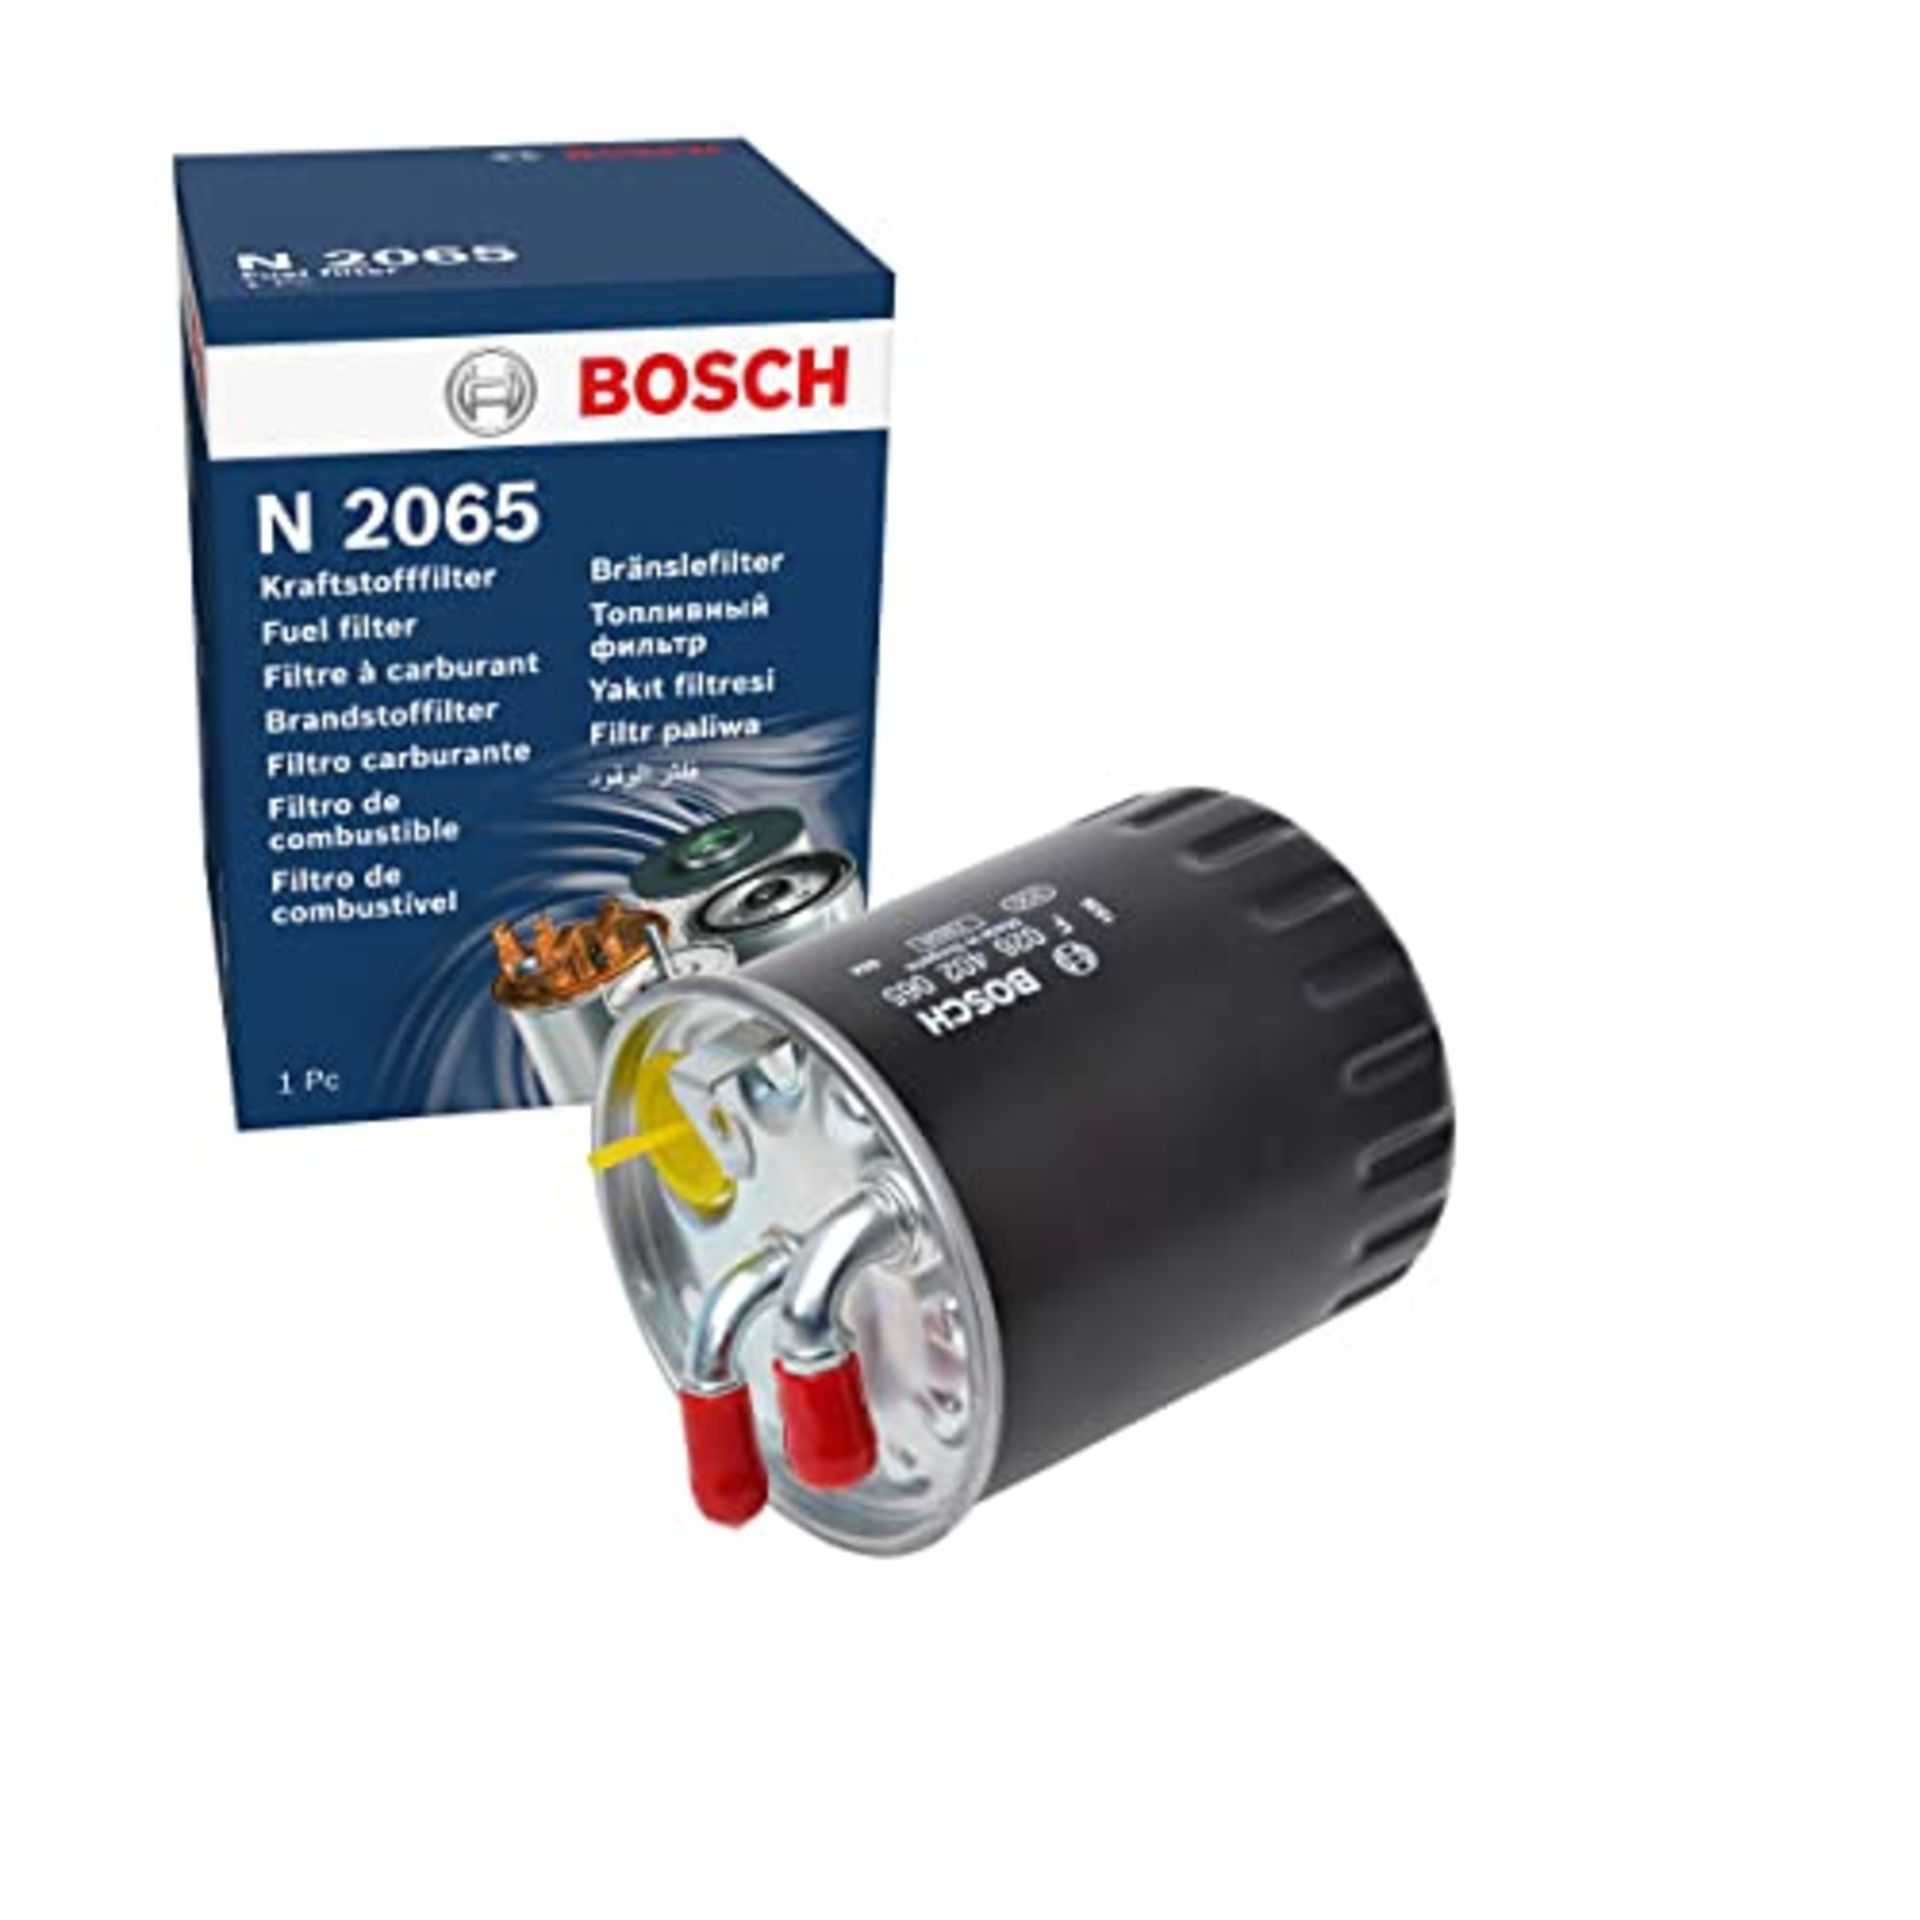 Bosch N2065 - Diesel Filter for Cars